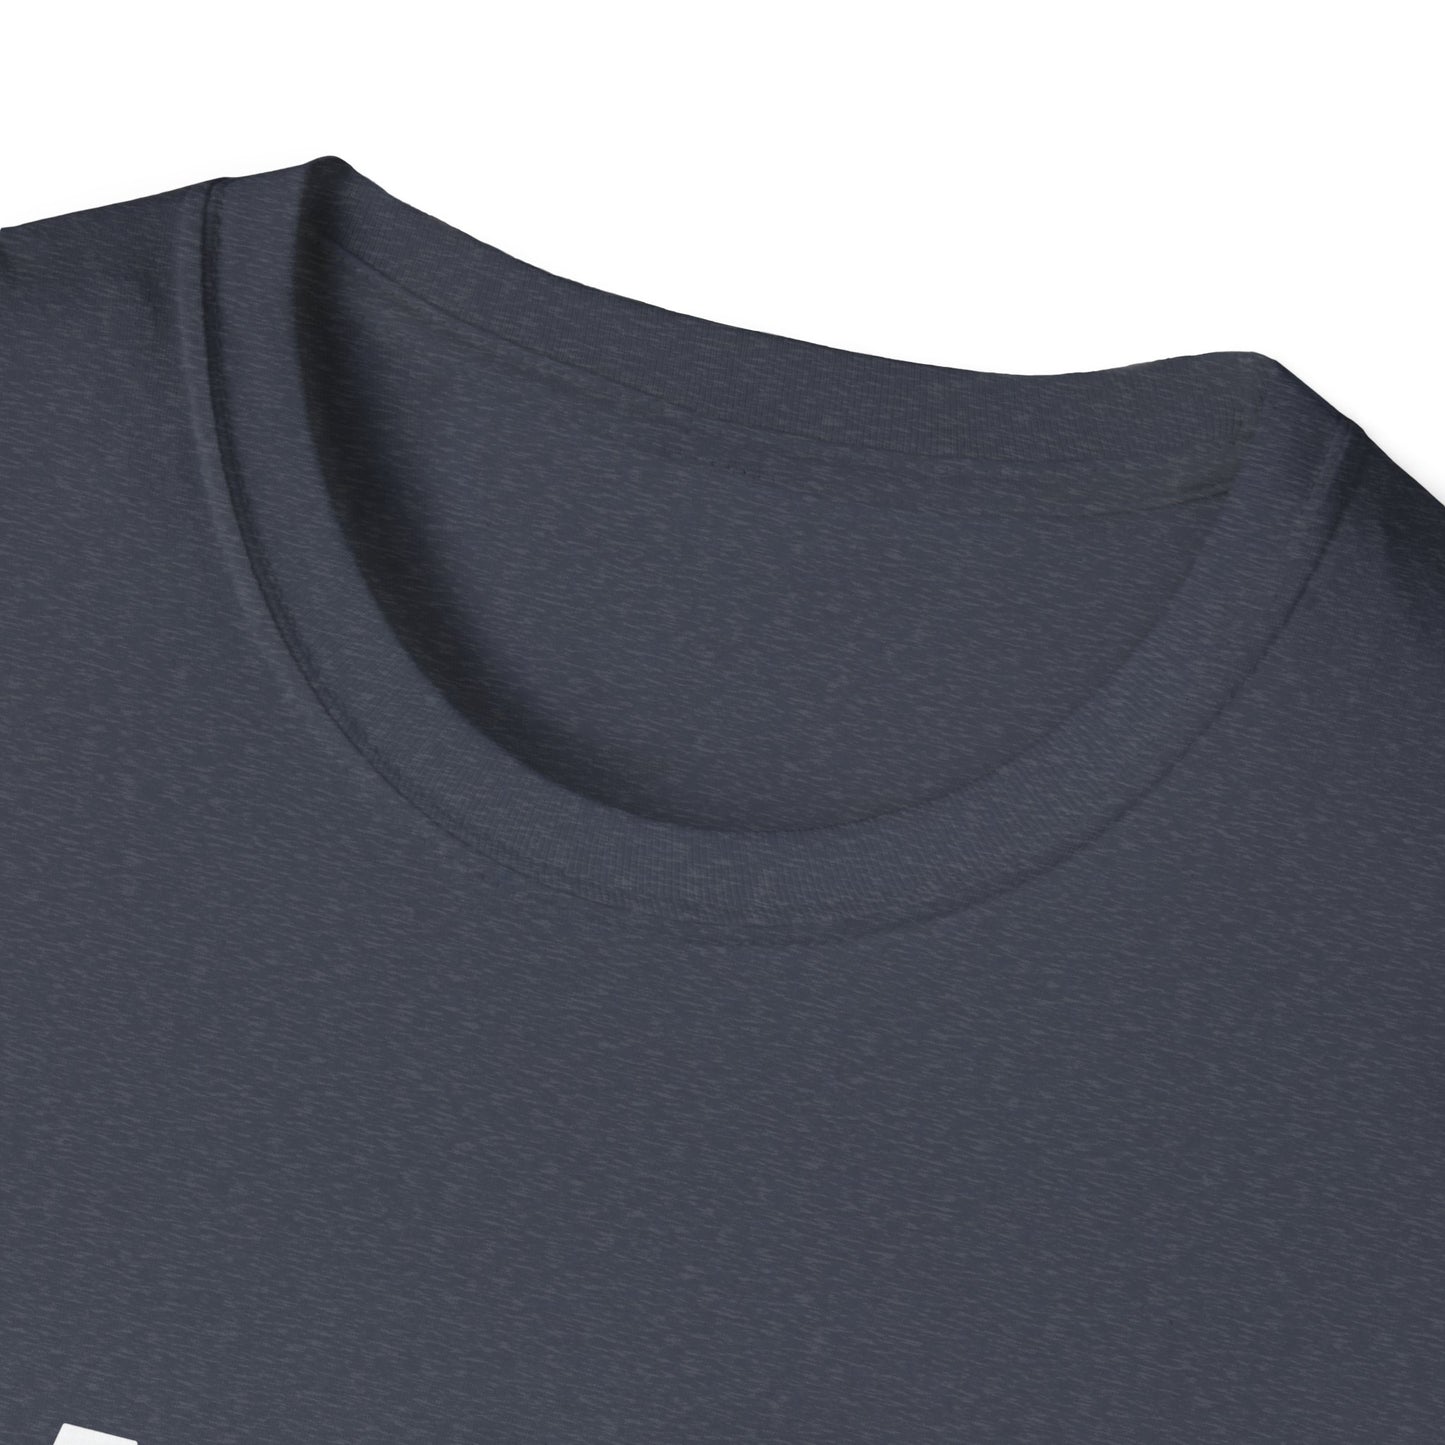 NASDA Team Dachshund   - 2 Unisex Softstyle T-Shirt